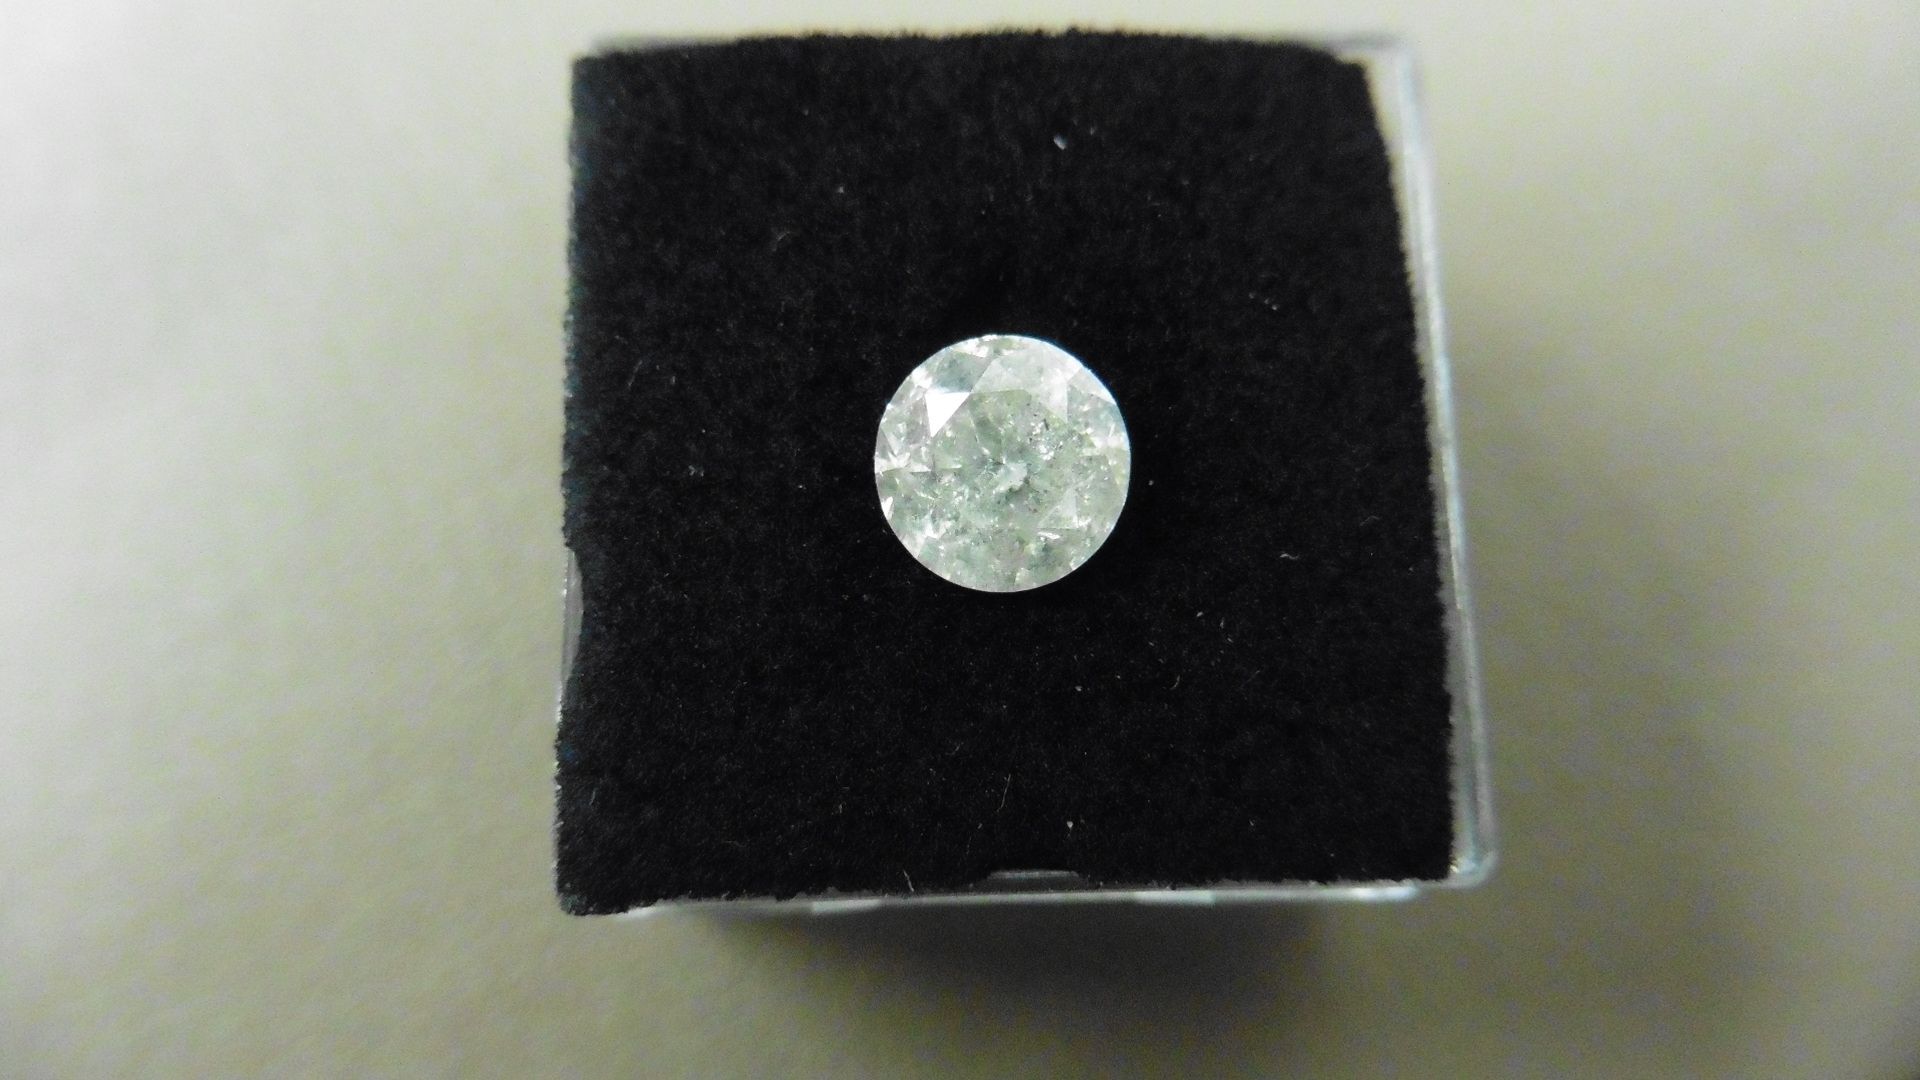 1.22ct Brilliant cut diamond K colur i1 clarity nice cut,valued at 1650 - Image 5 of 5